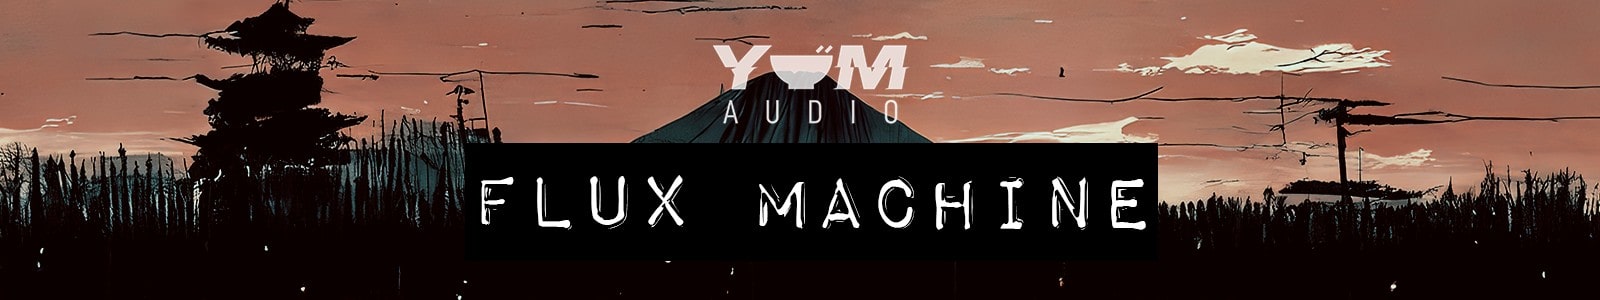 LoFi Flux Machine by Yum Audio